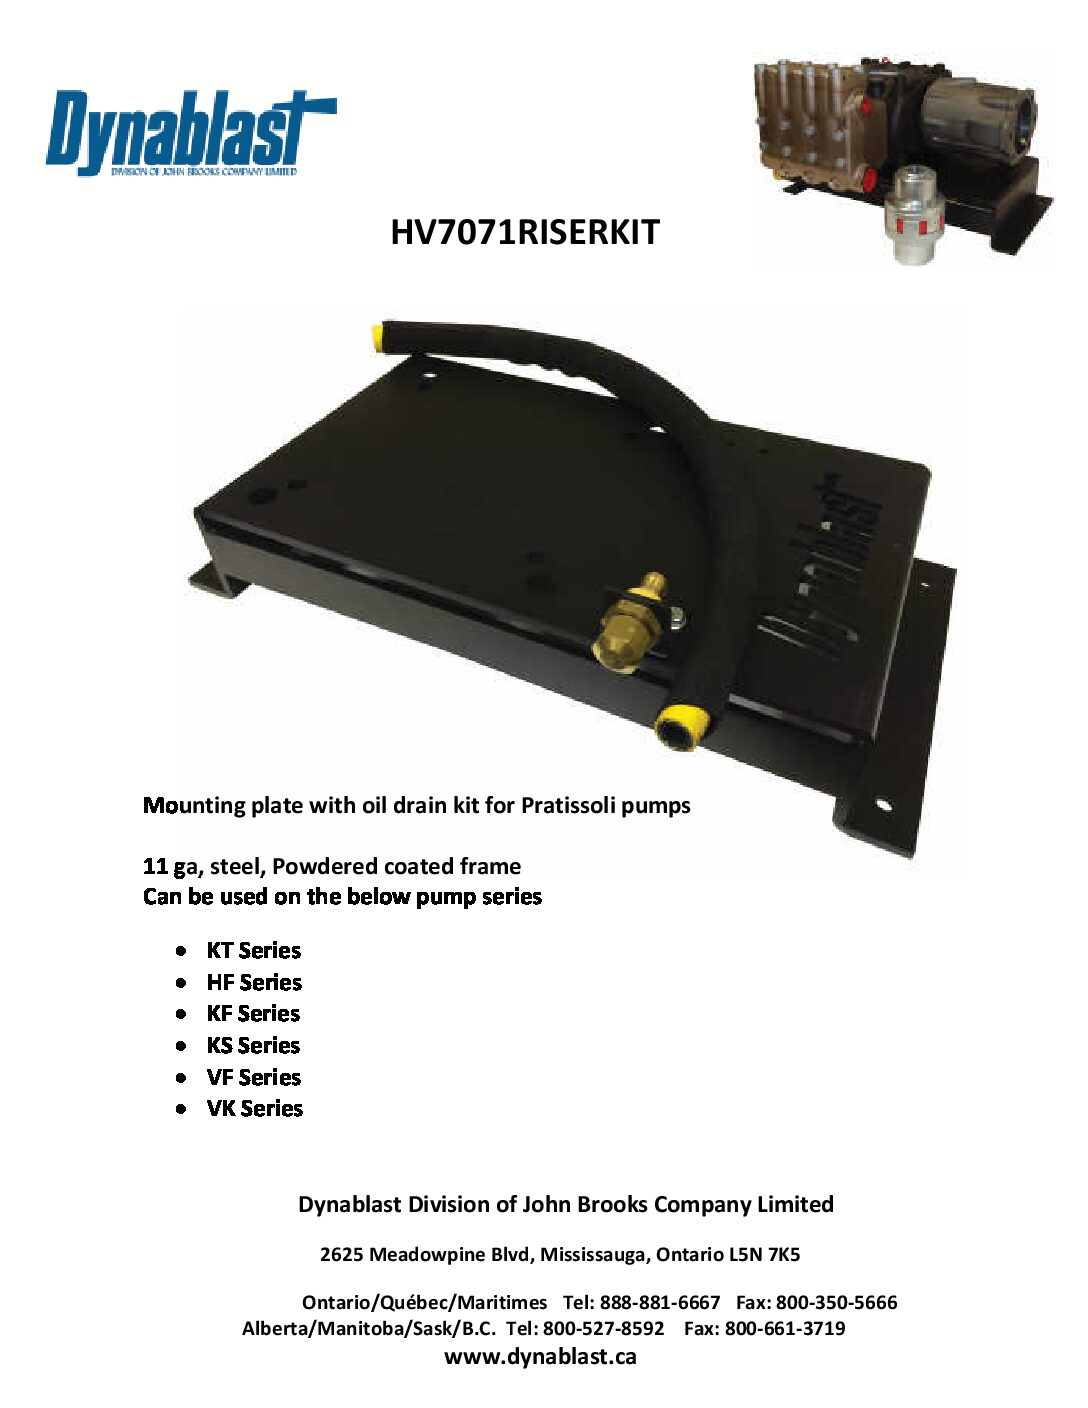 Dynablast Pratissoli Pump Riser Kit HV7071RISERKIT LIT